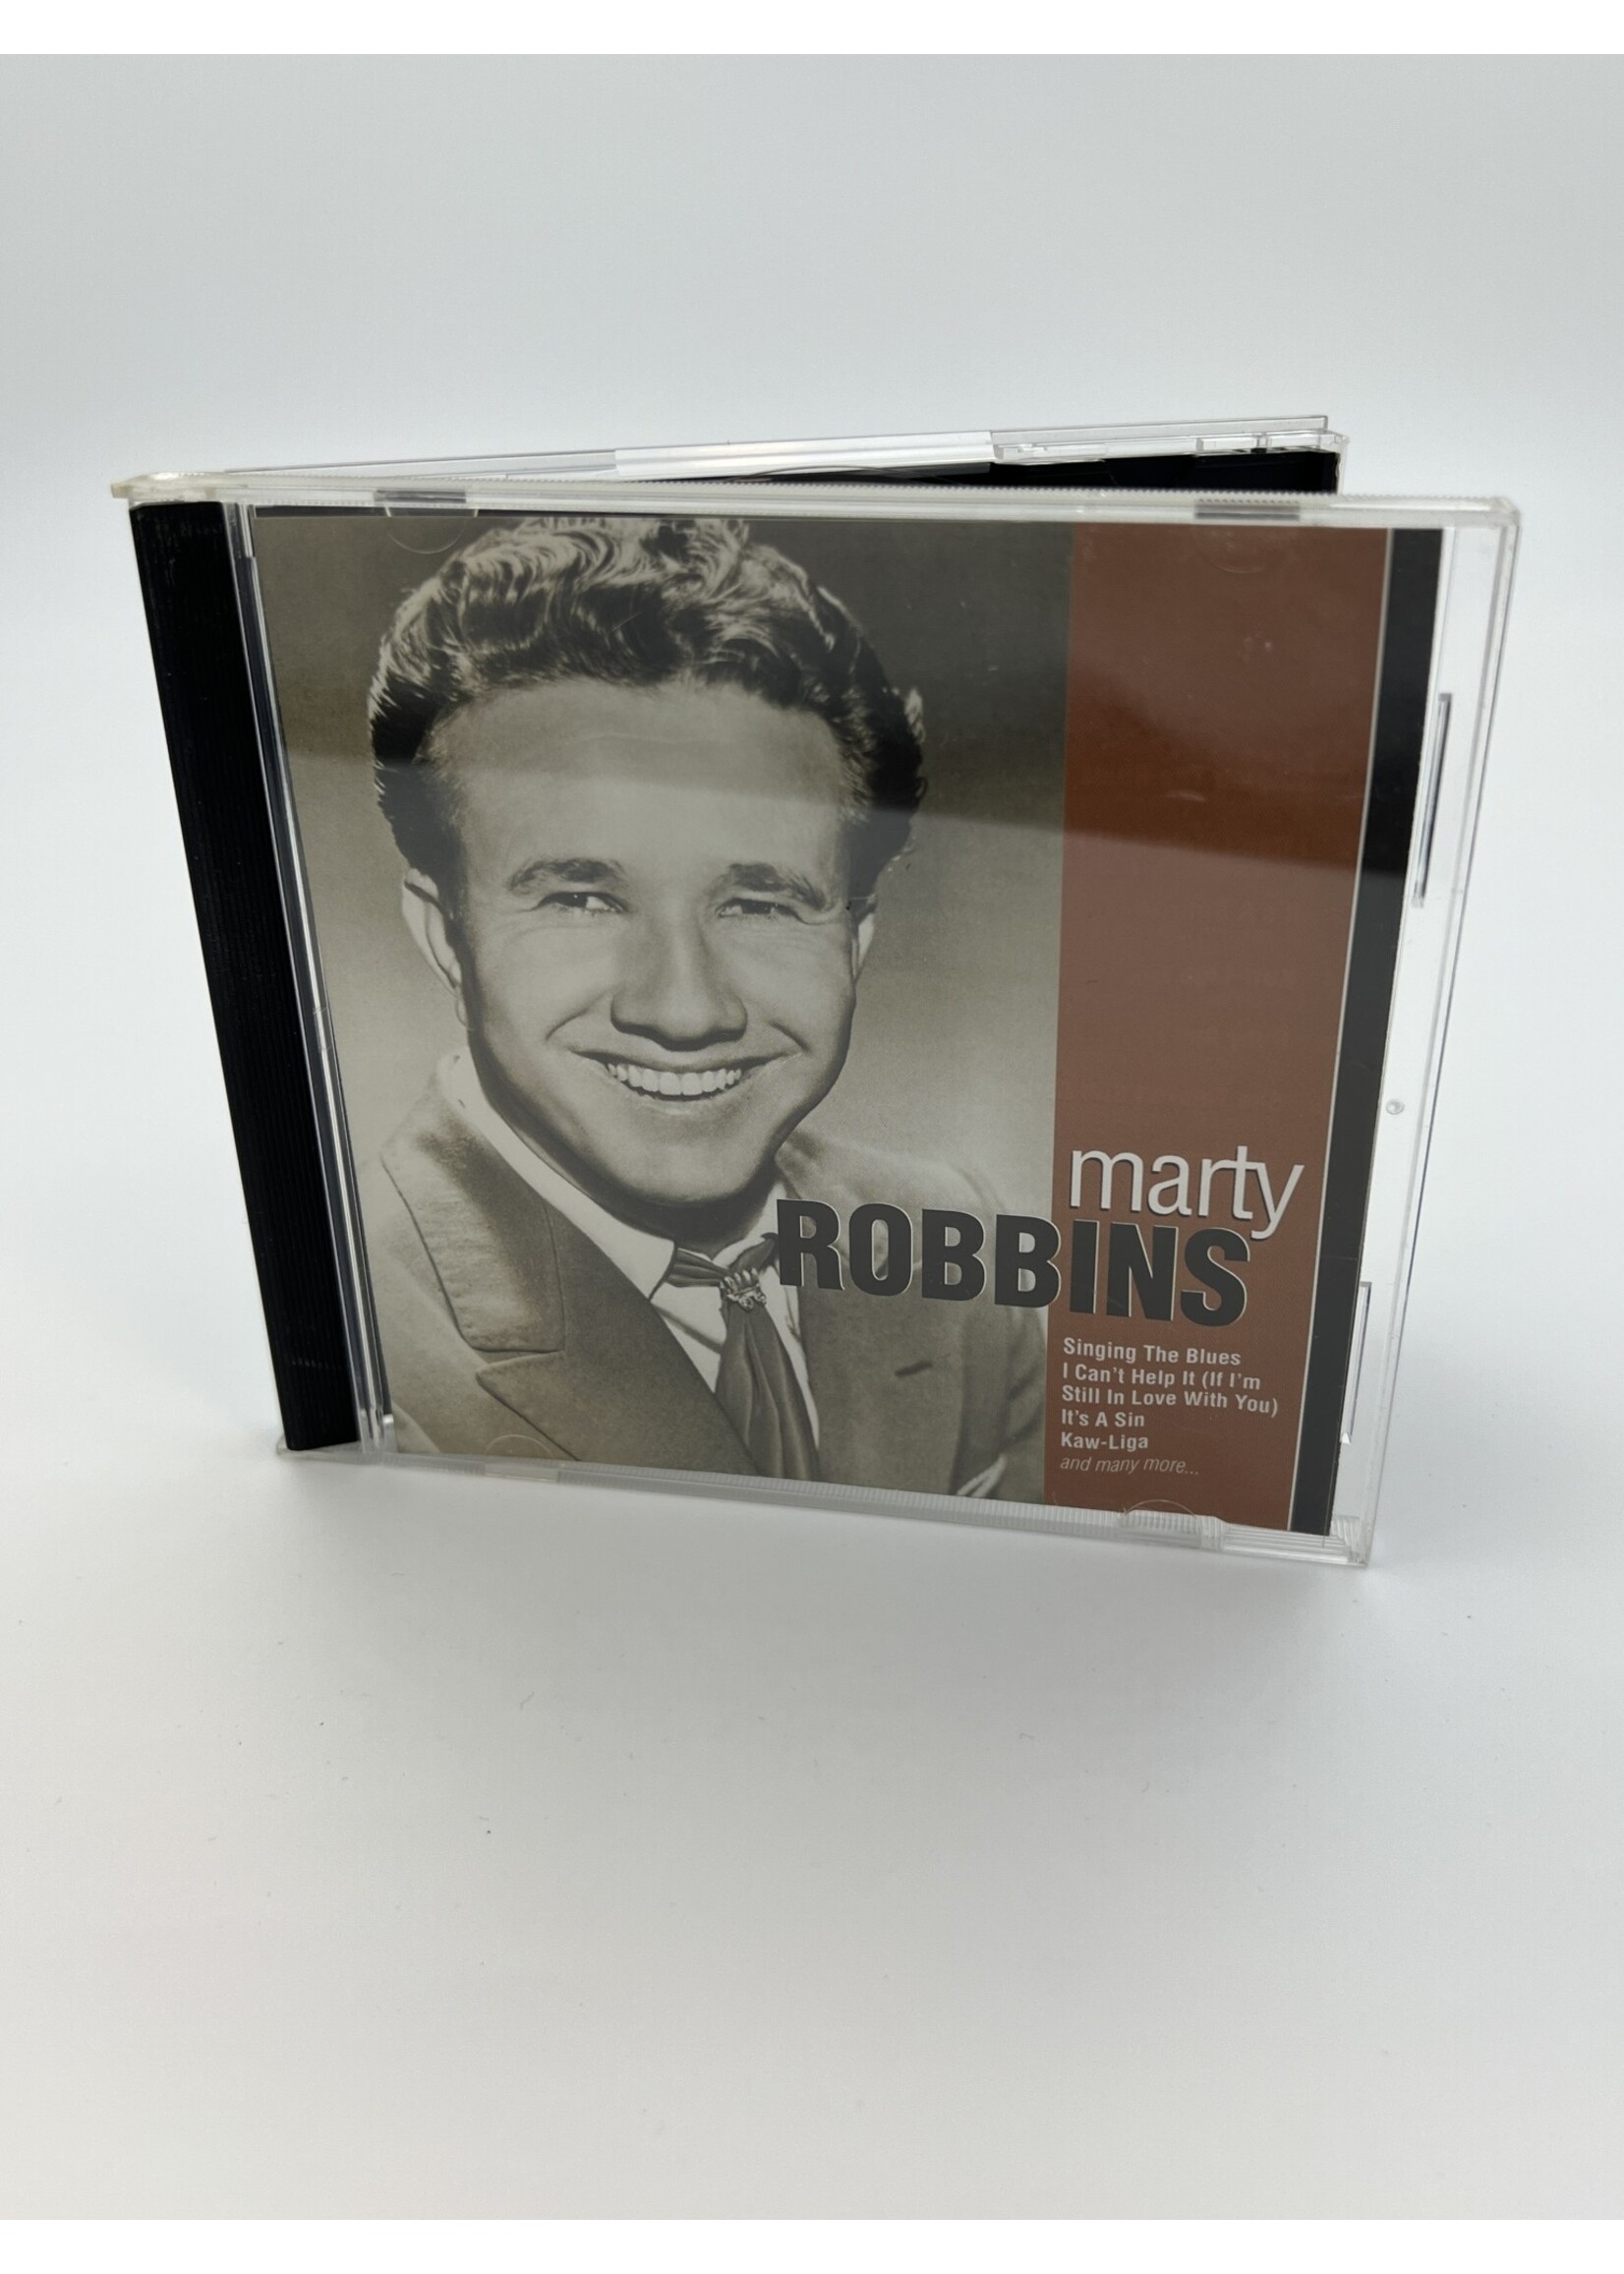 CD Marty Robbins Self Titled CD